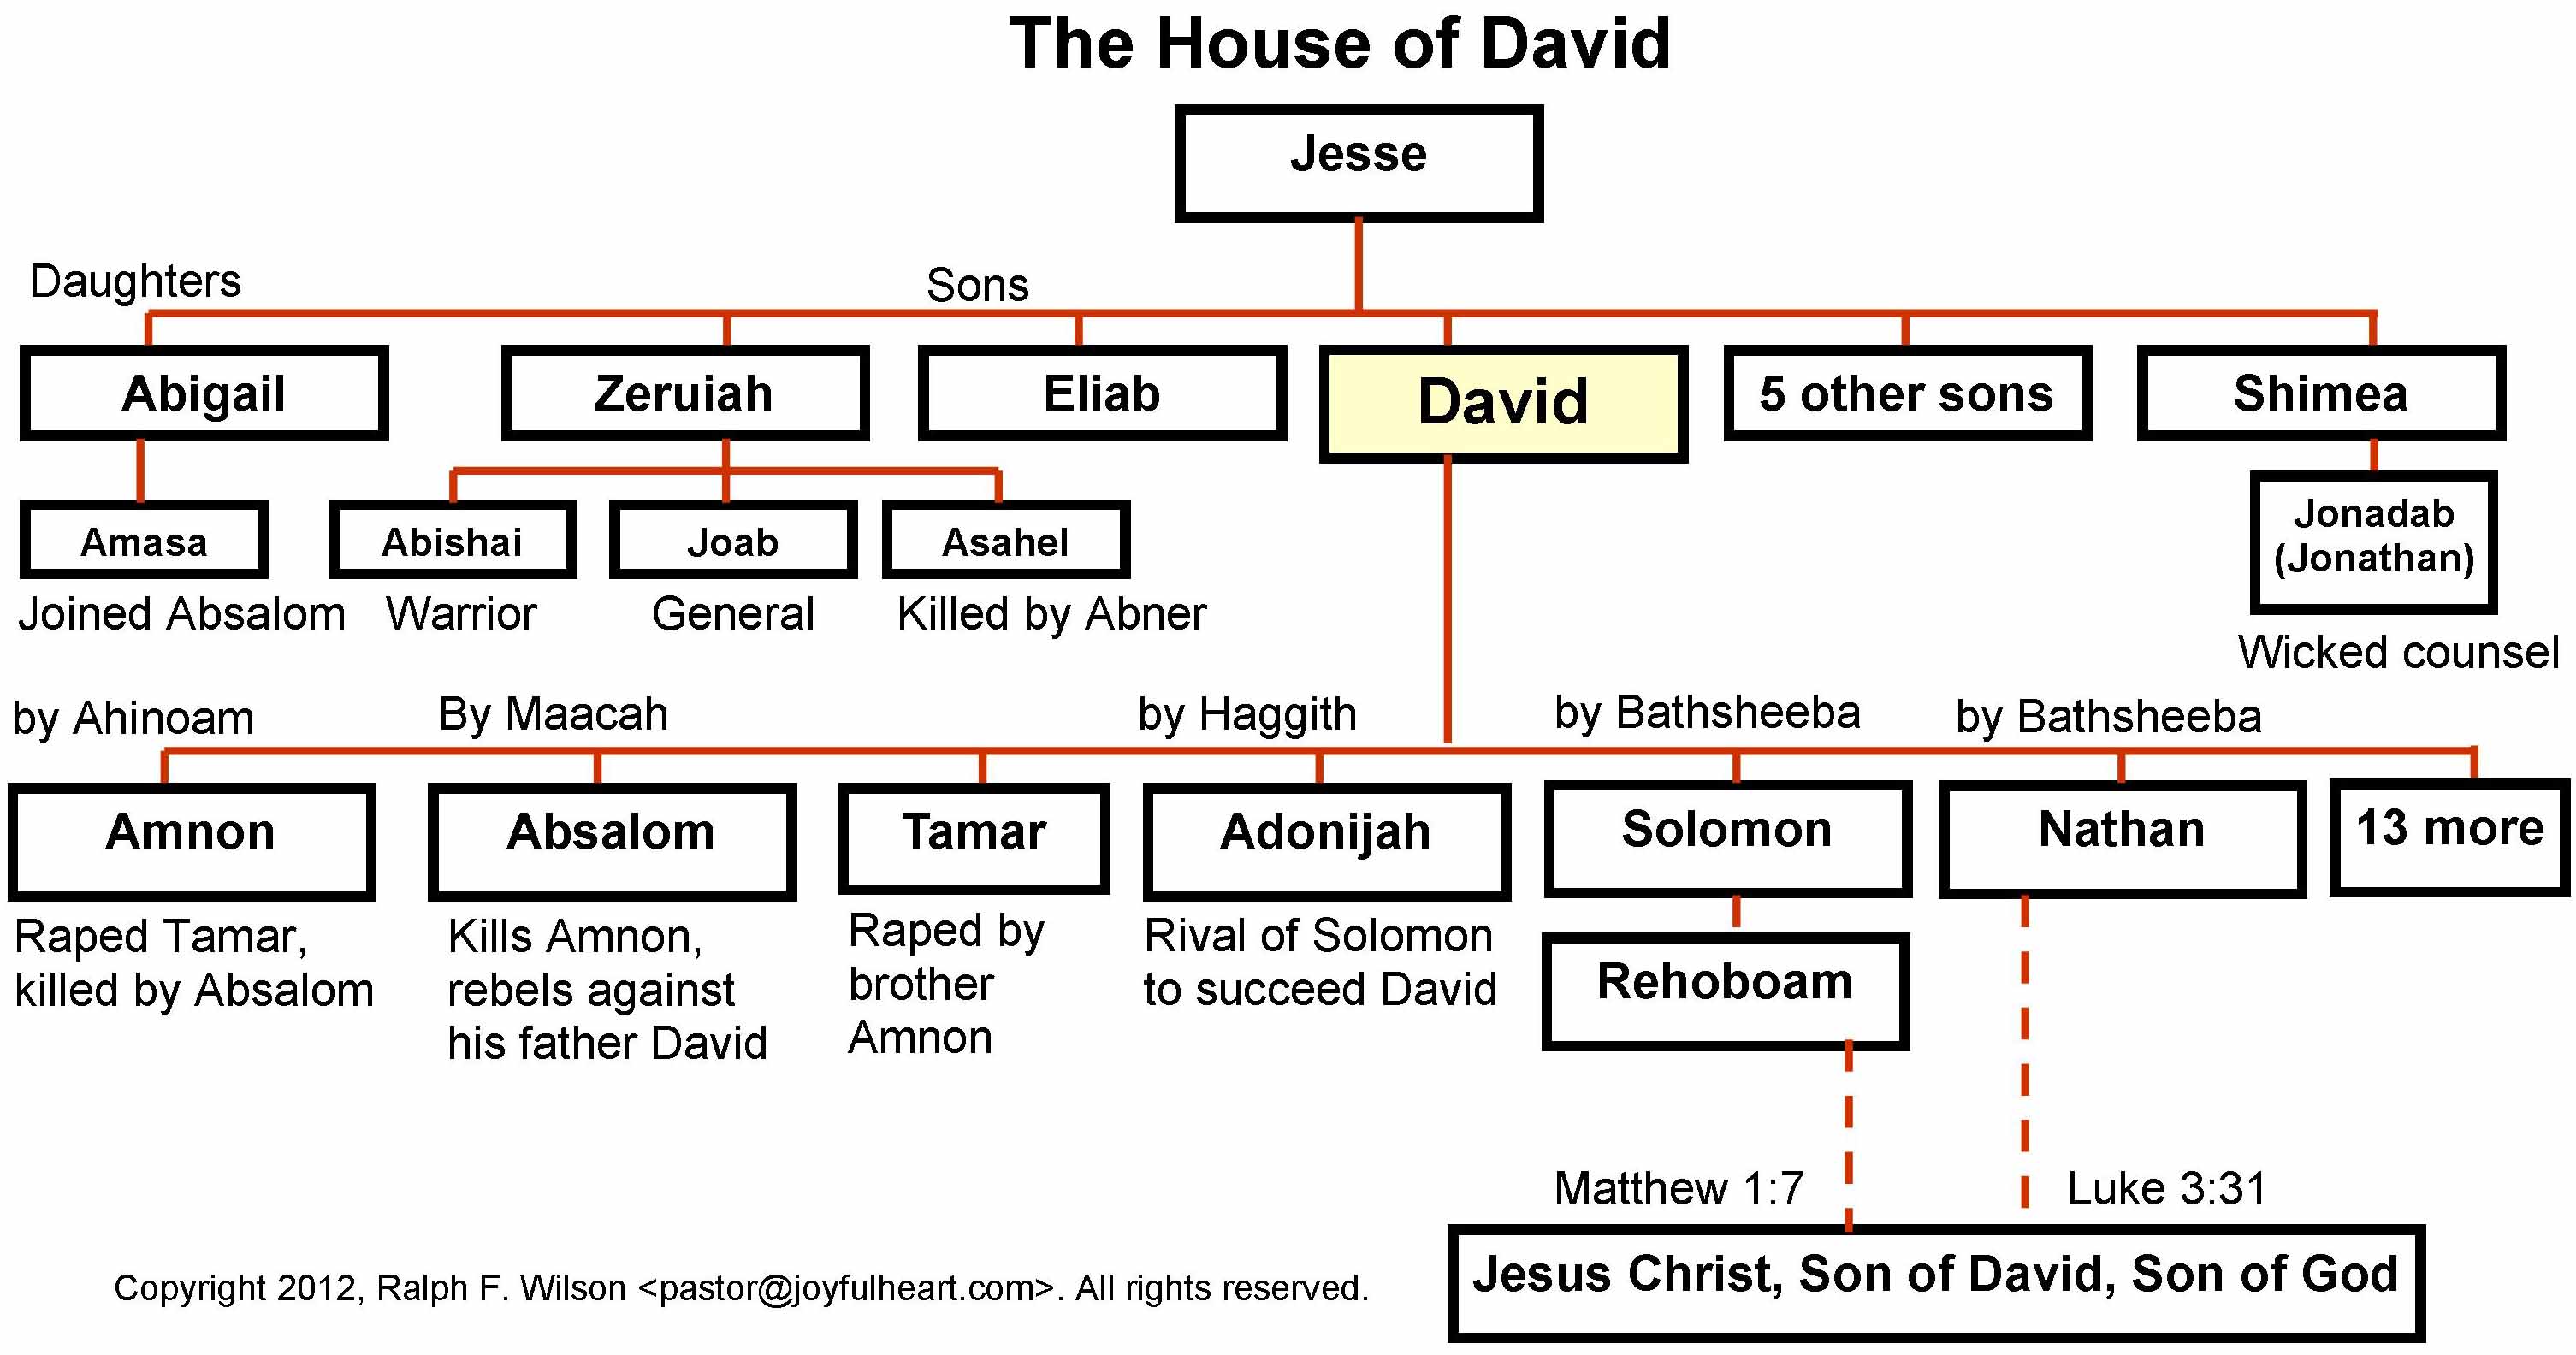 Genealogy of Jesus 